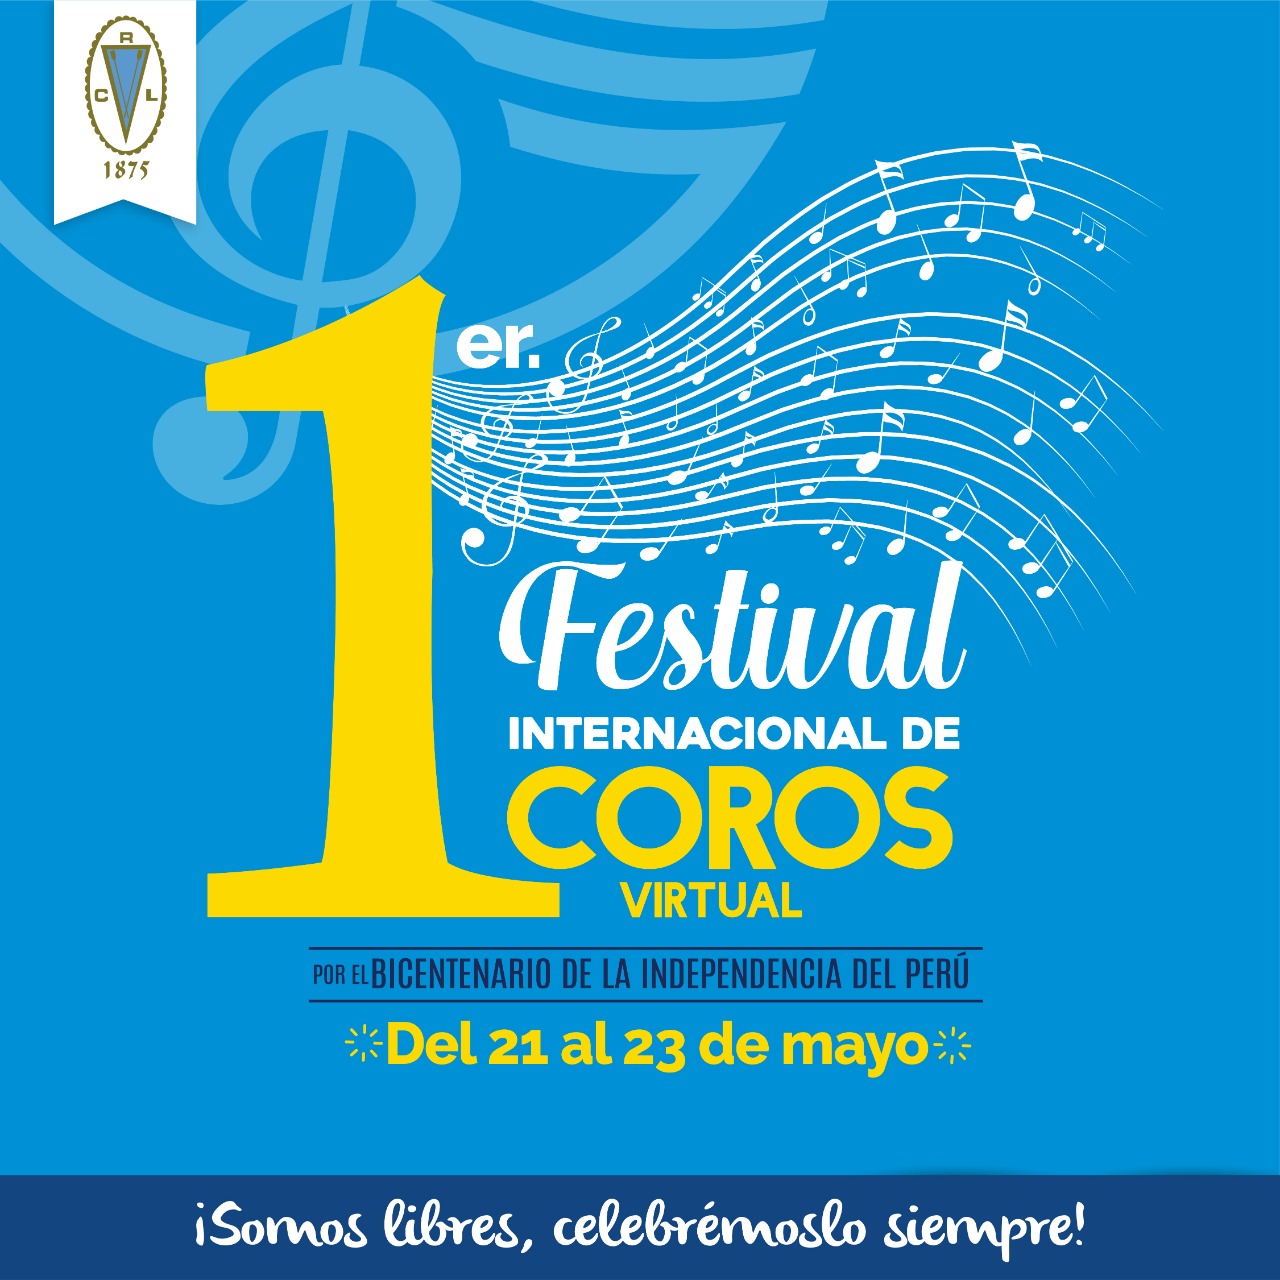 Club de Regatas Lima organiza Festival Internacional de Coros de manera virtual